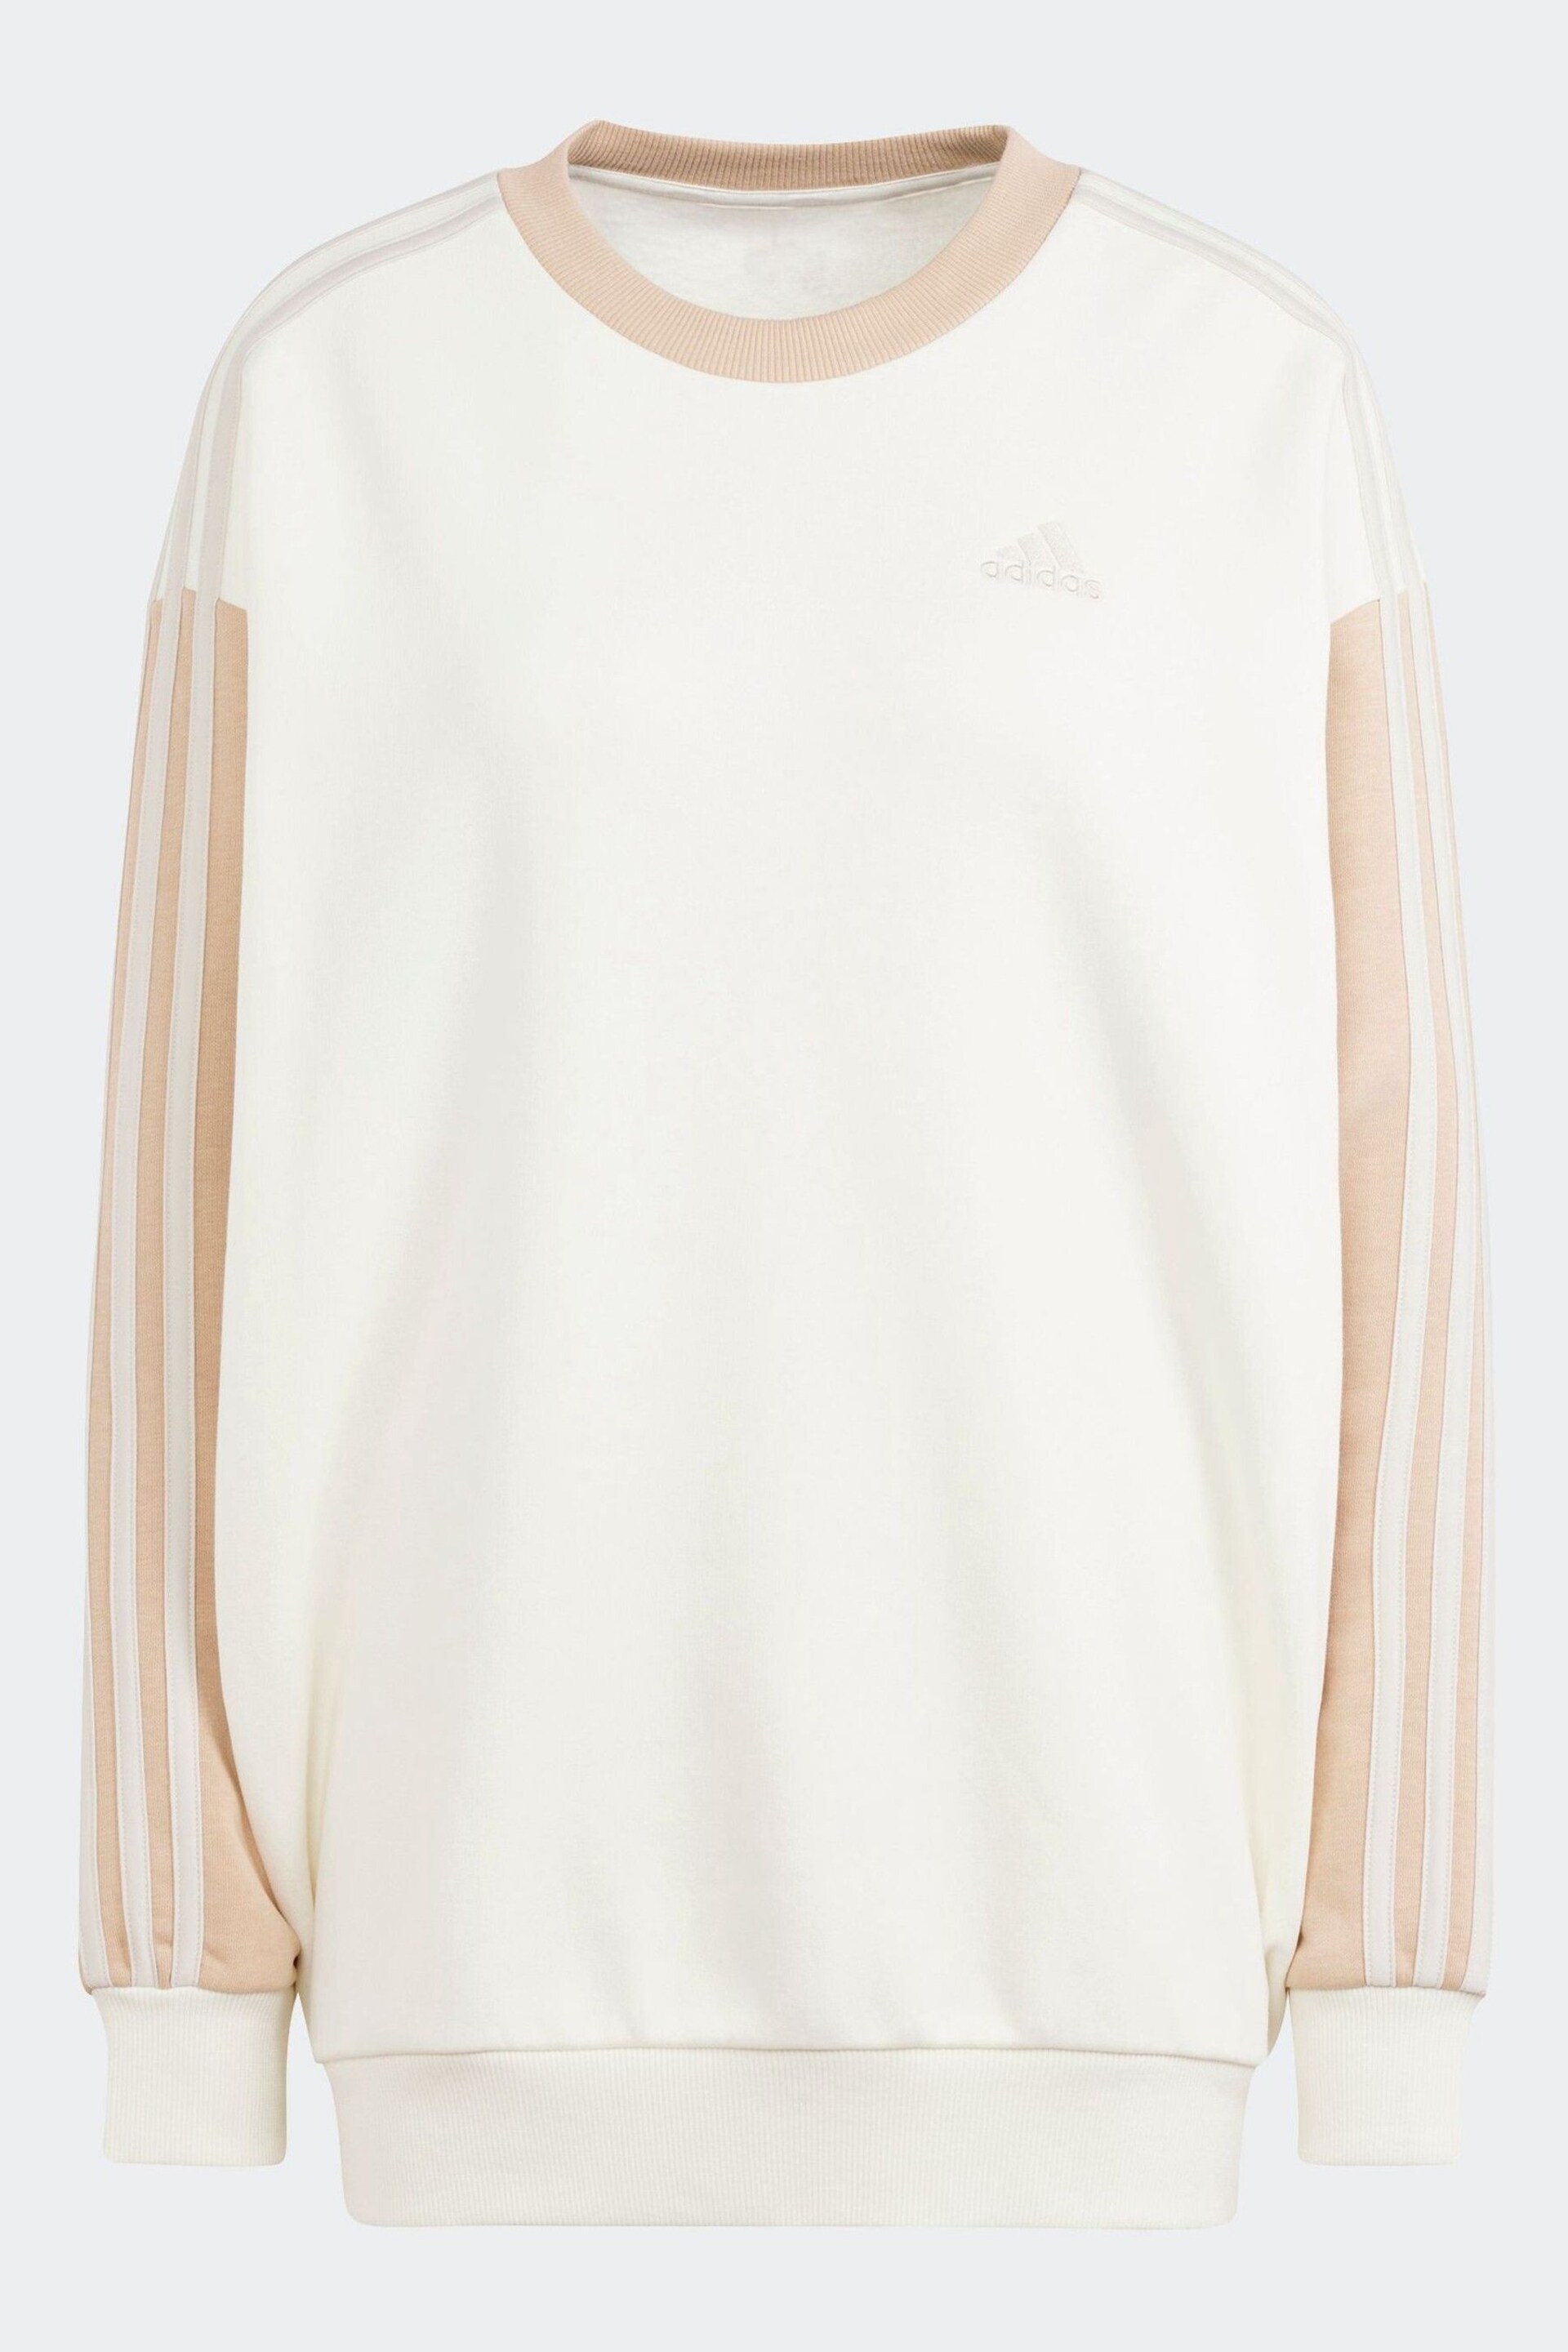 adidas White Sportswear Essentials 3-Stripes Oversized Fleece Sweatshirt - Image 7 of 7